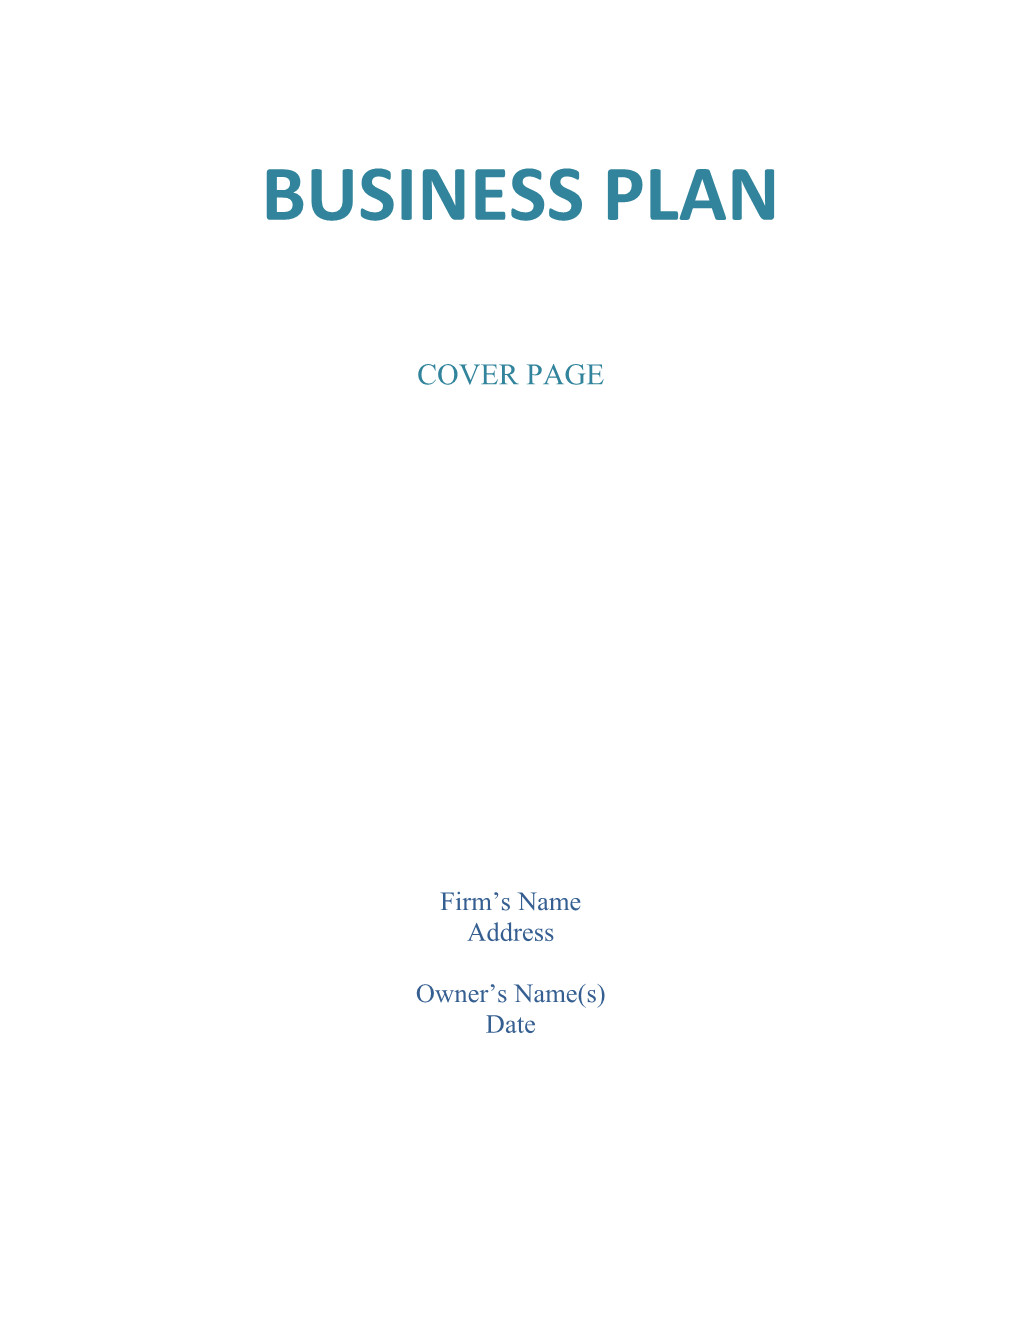 Business Plan s5